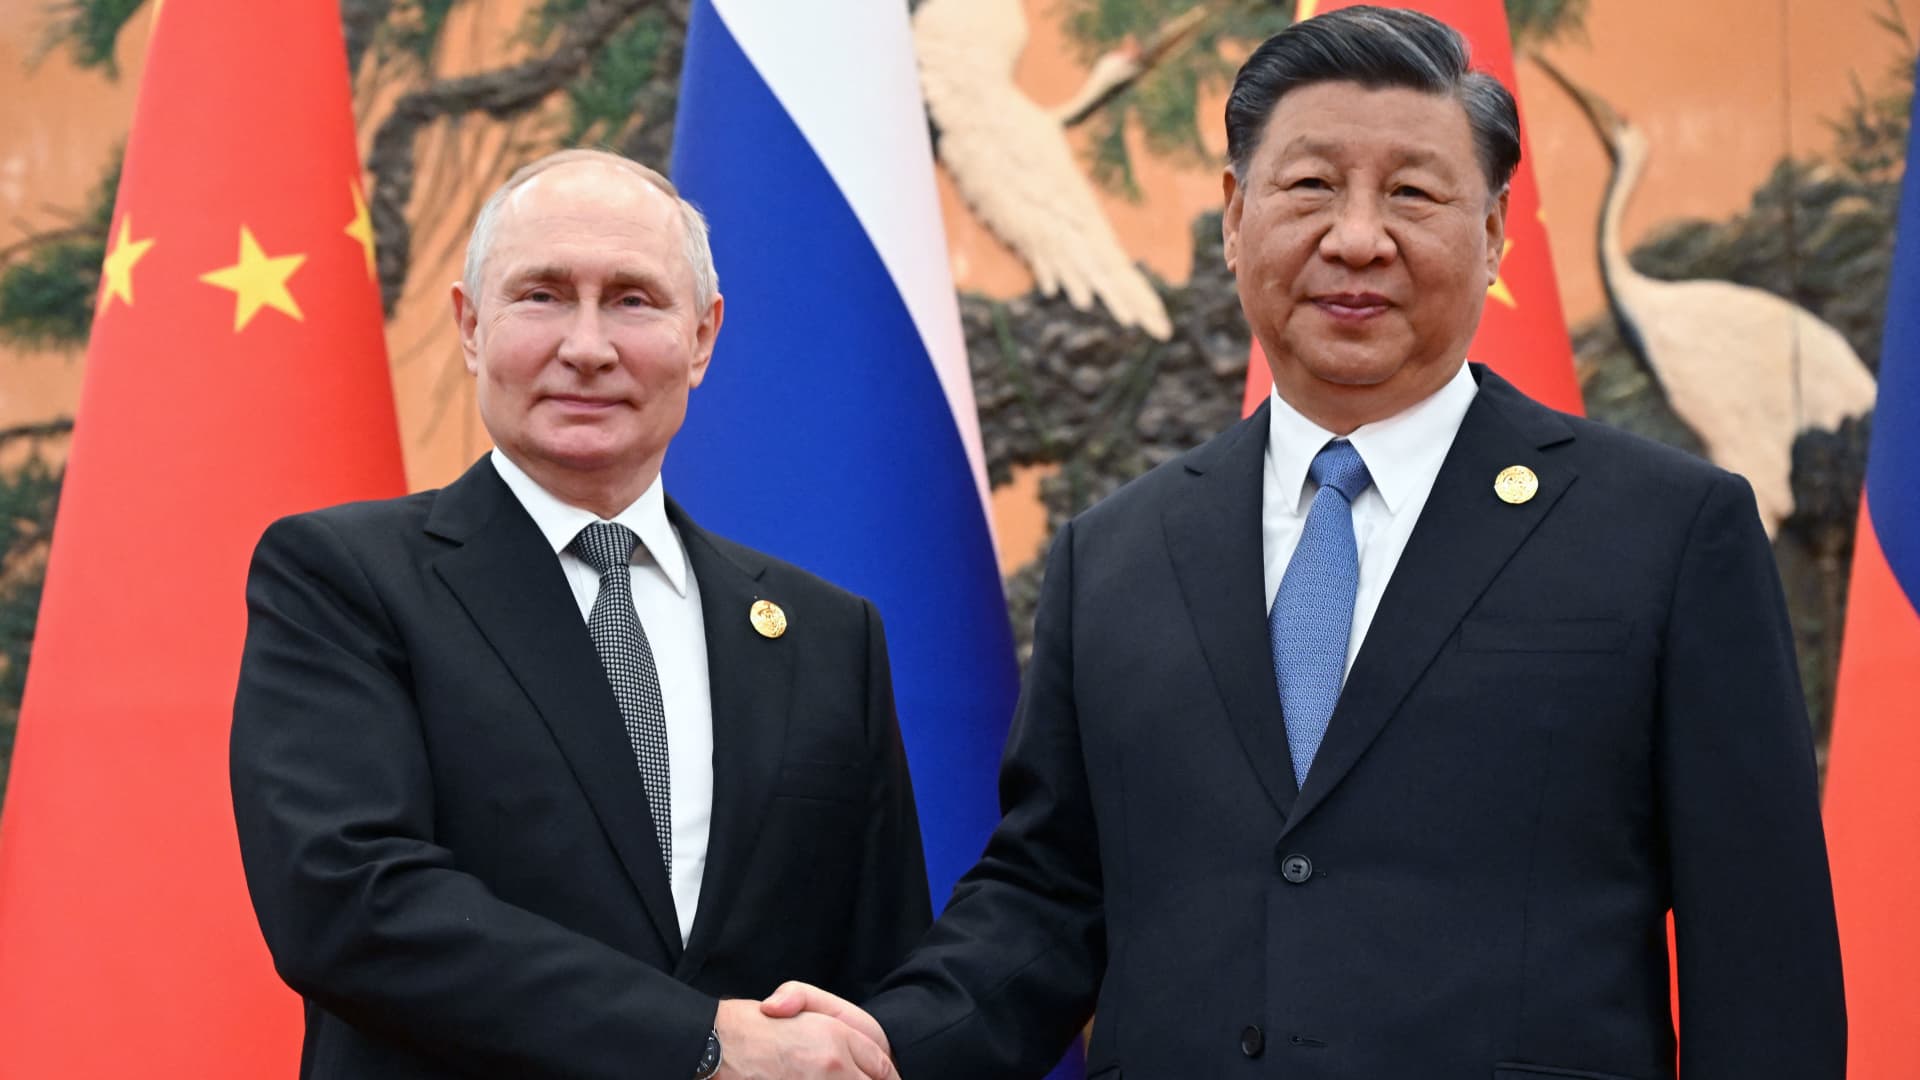 Xi welcomes Putin to China as both leaders seek to strengthen ties